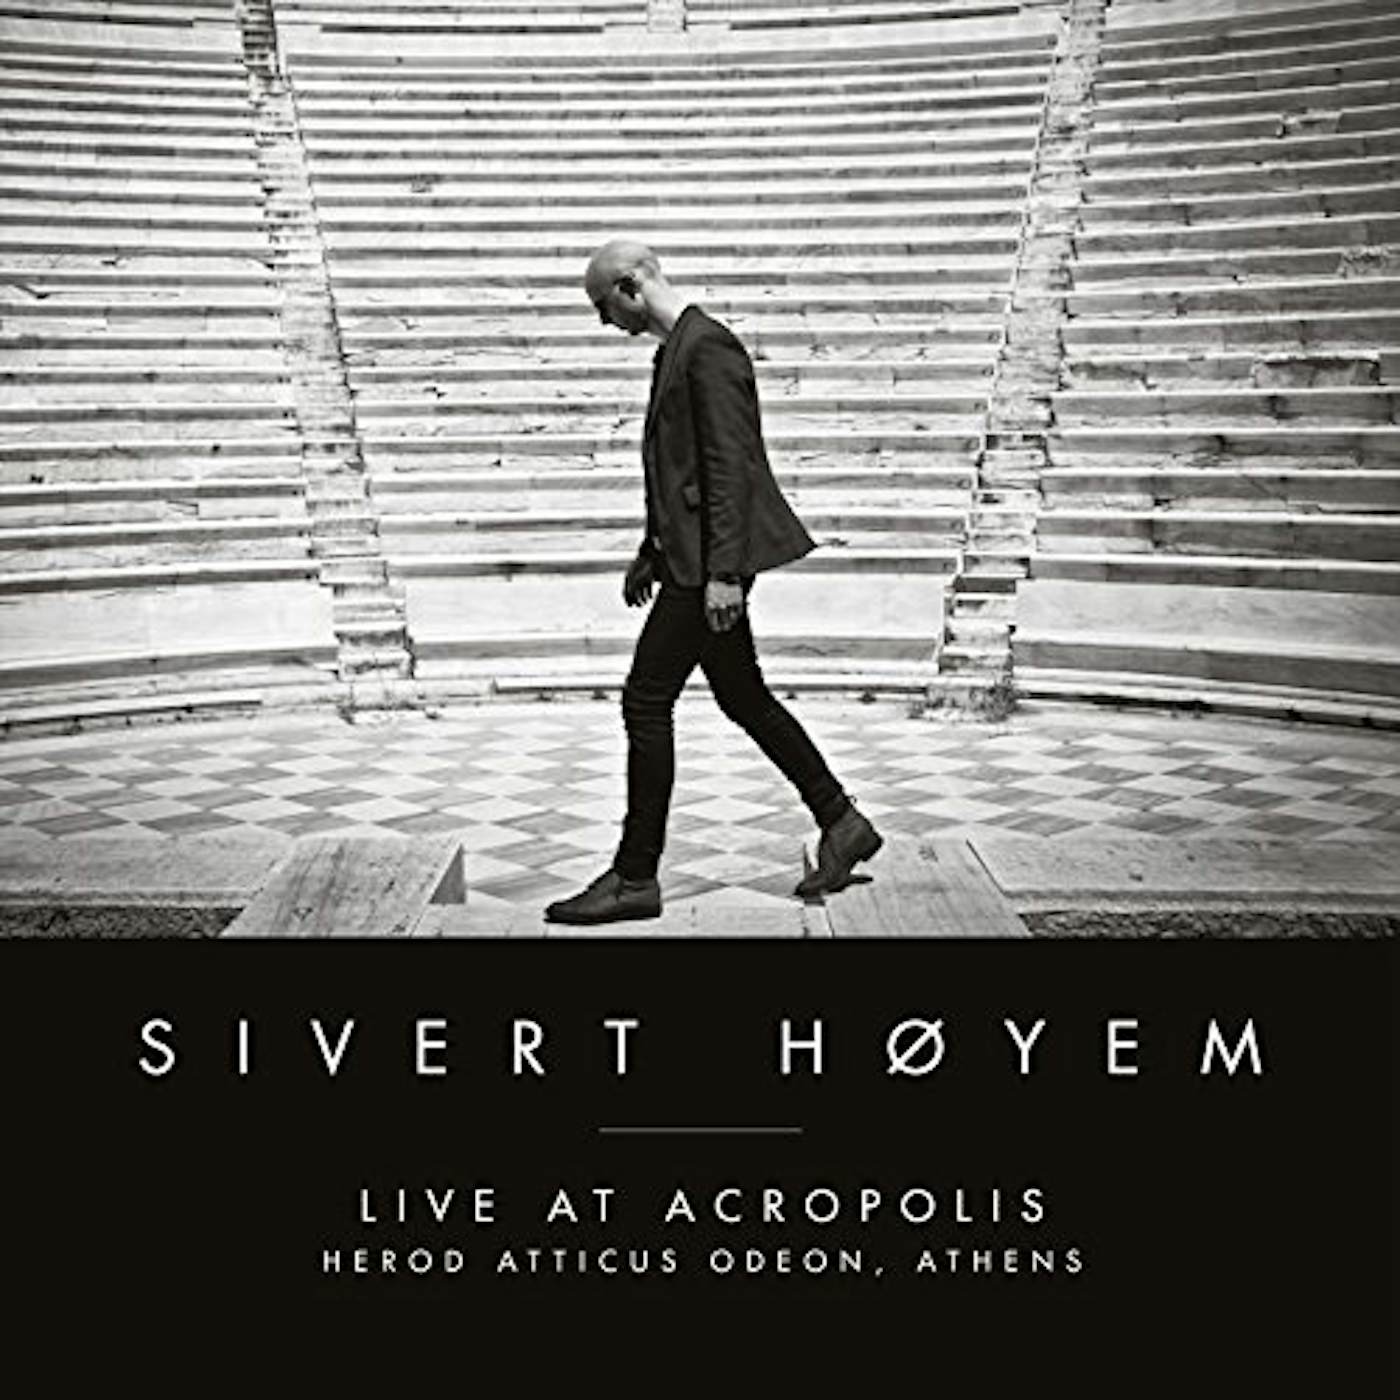 Sivert Høyem LIVE AT ACROPOLIS: HEROD ATTICUS ODEON ATHENS CD